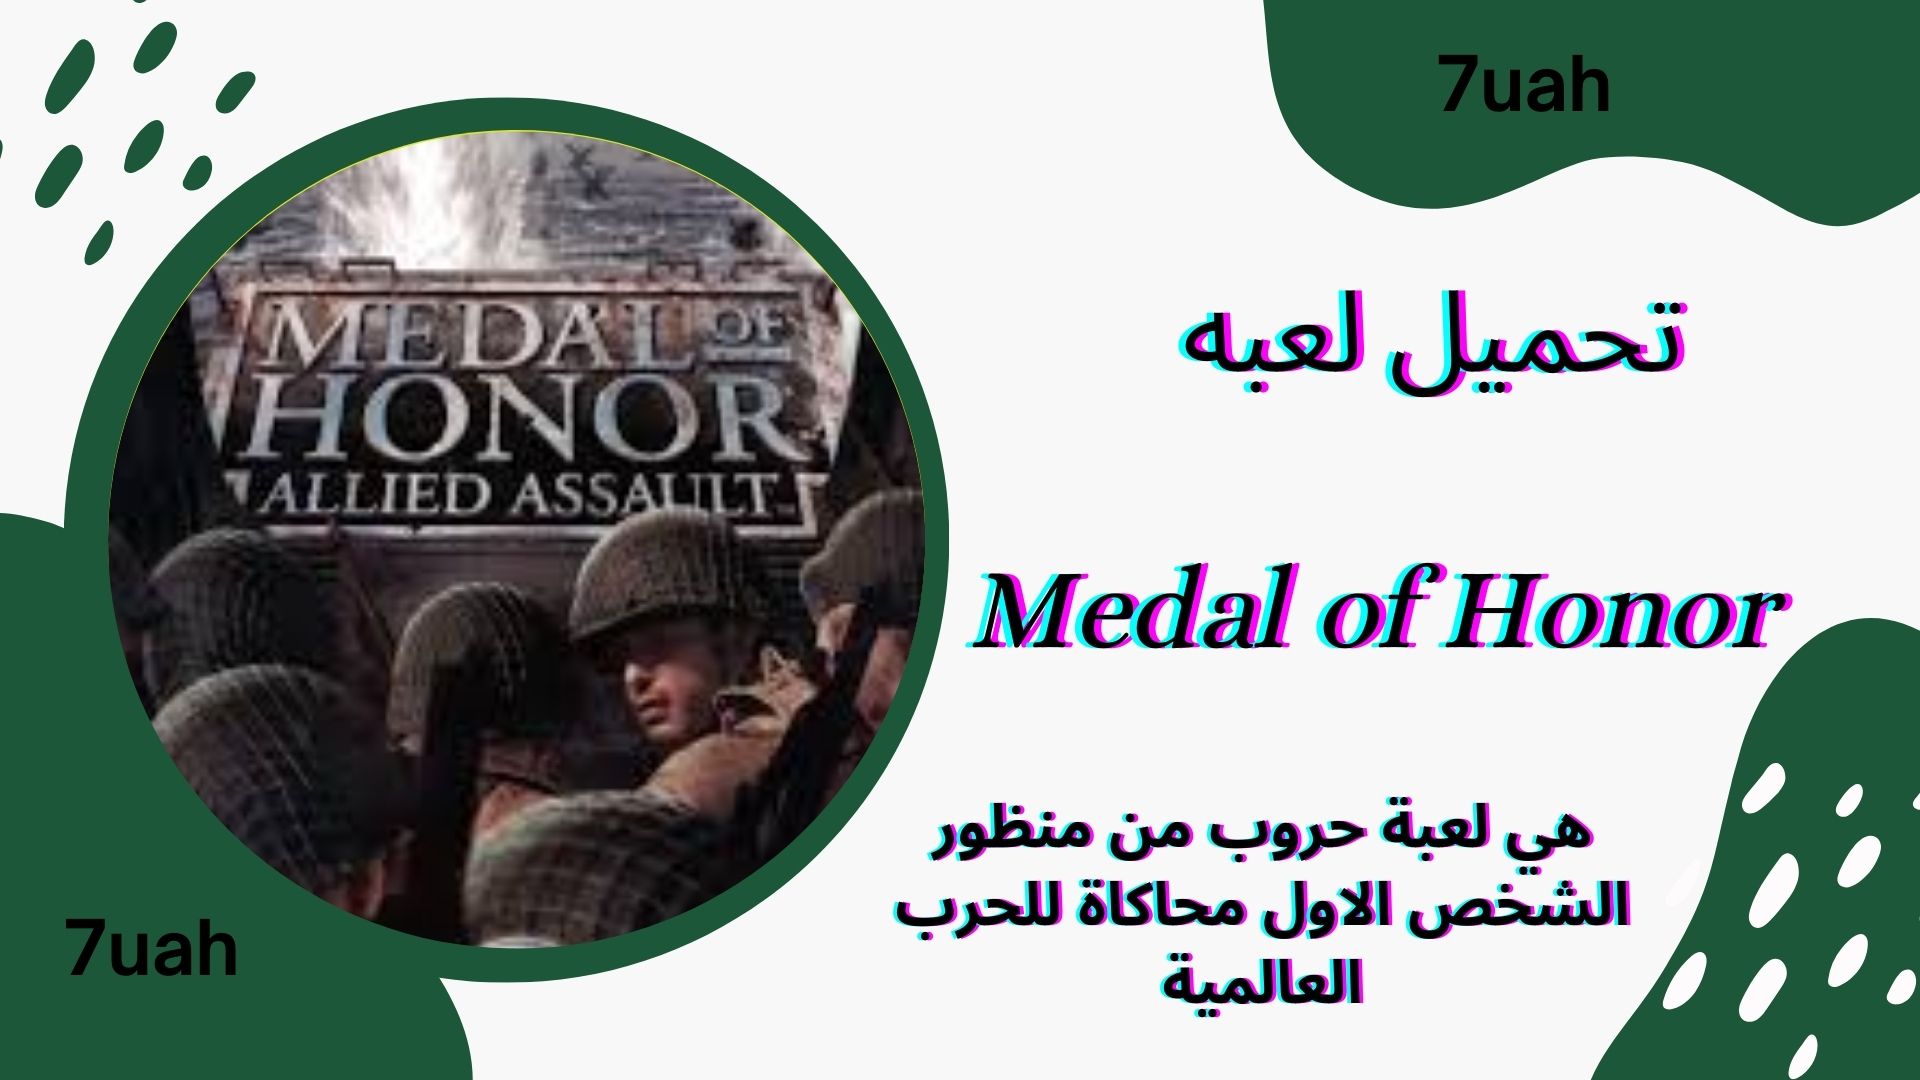 تحميل لعبة ميدل اوف هونر للاندرويد Medal of Honor Apk من ميديا فاير